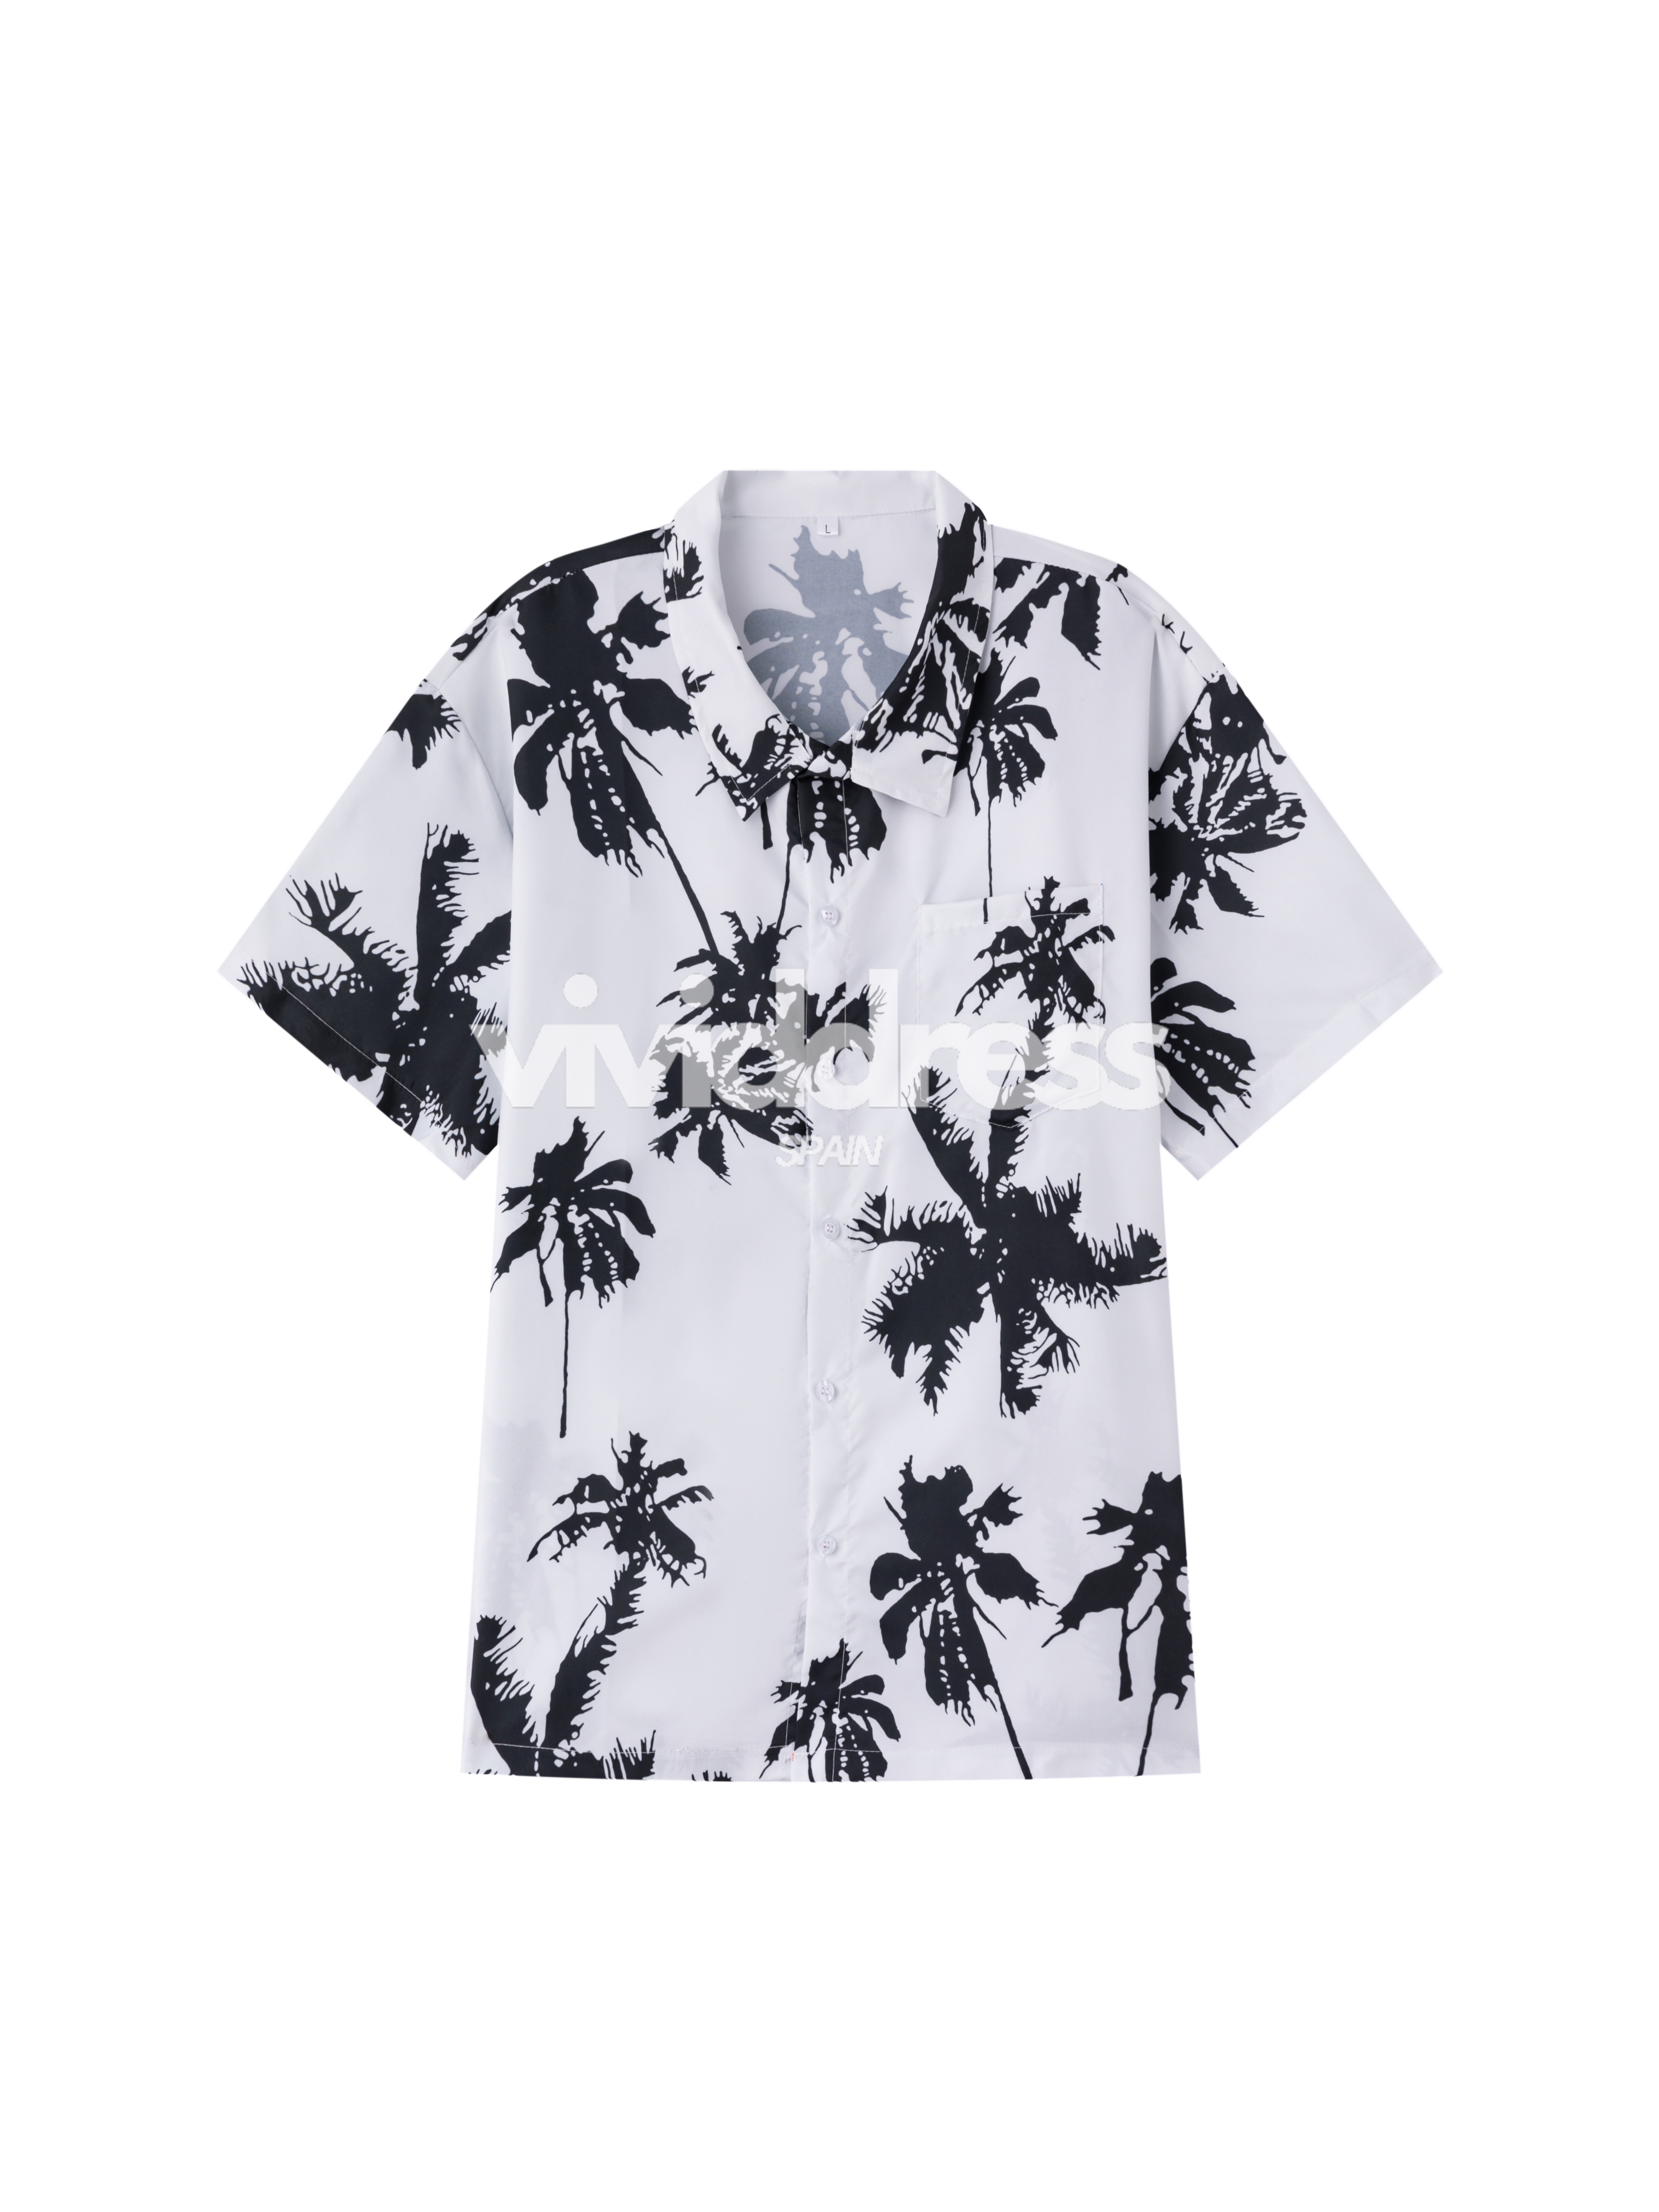 Men's Tropical Palm Tree Print Beach Hawaiian Holiday Short Sleeve Shirt